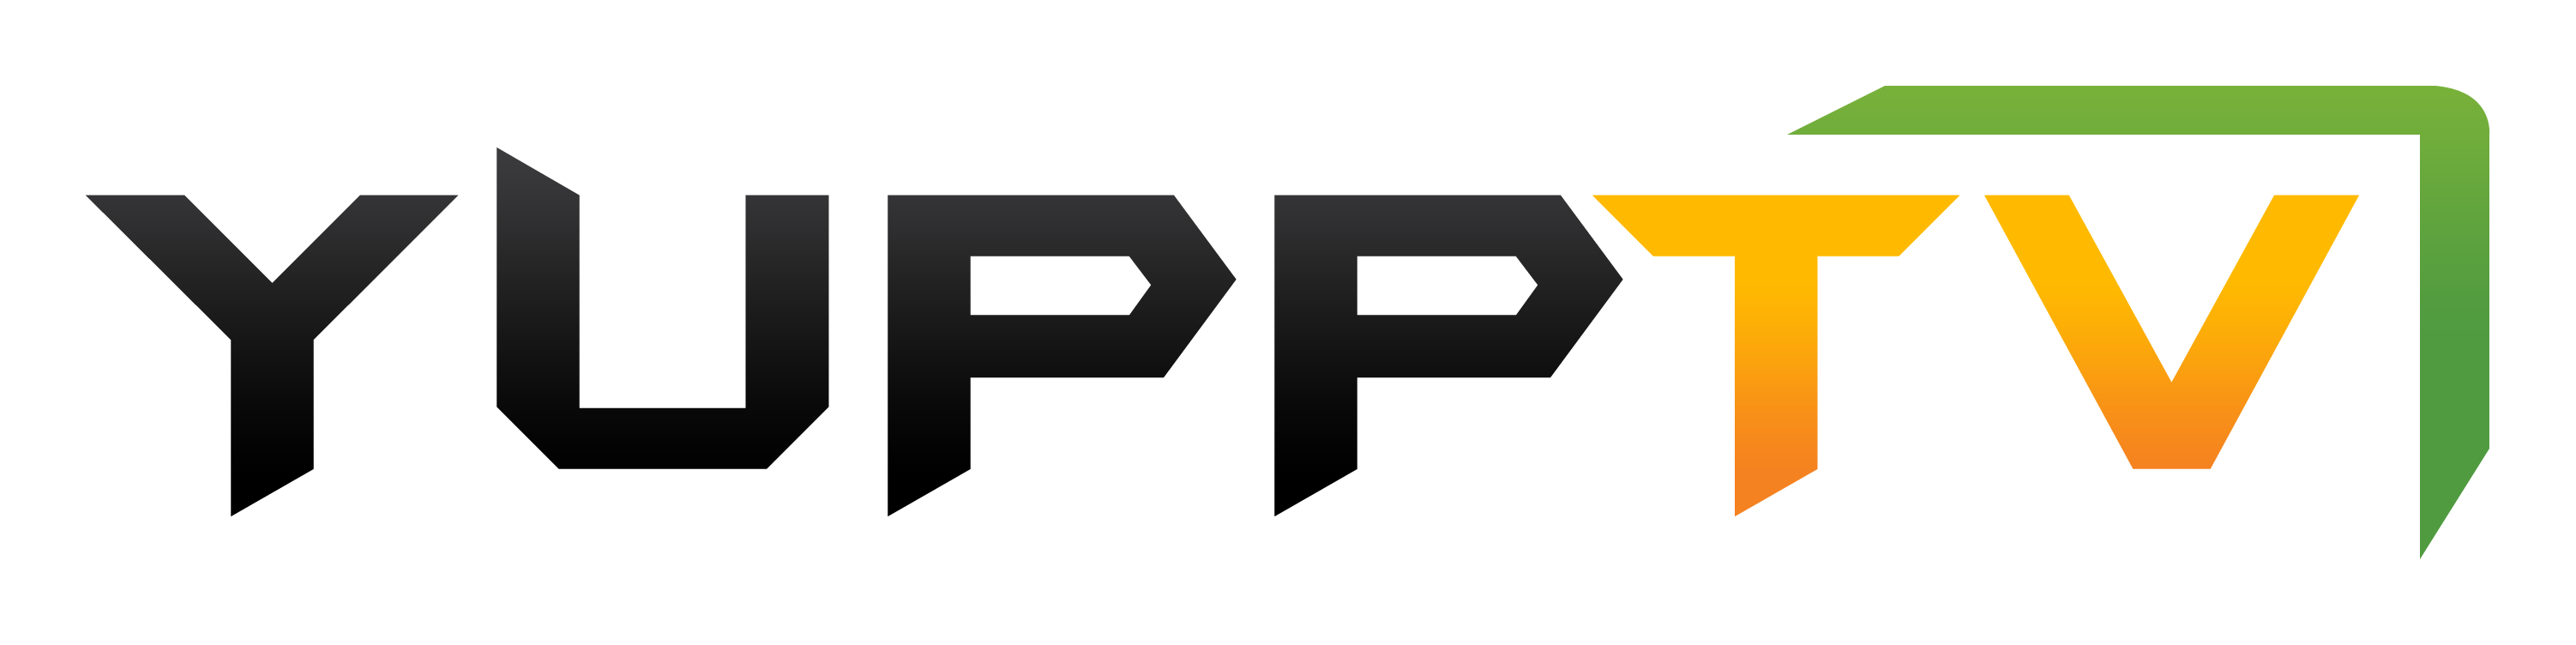 YuppTV_logo_jpg